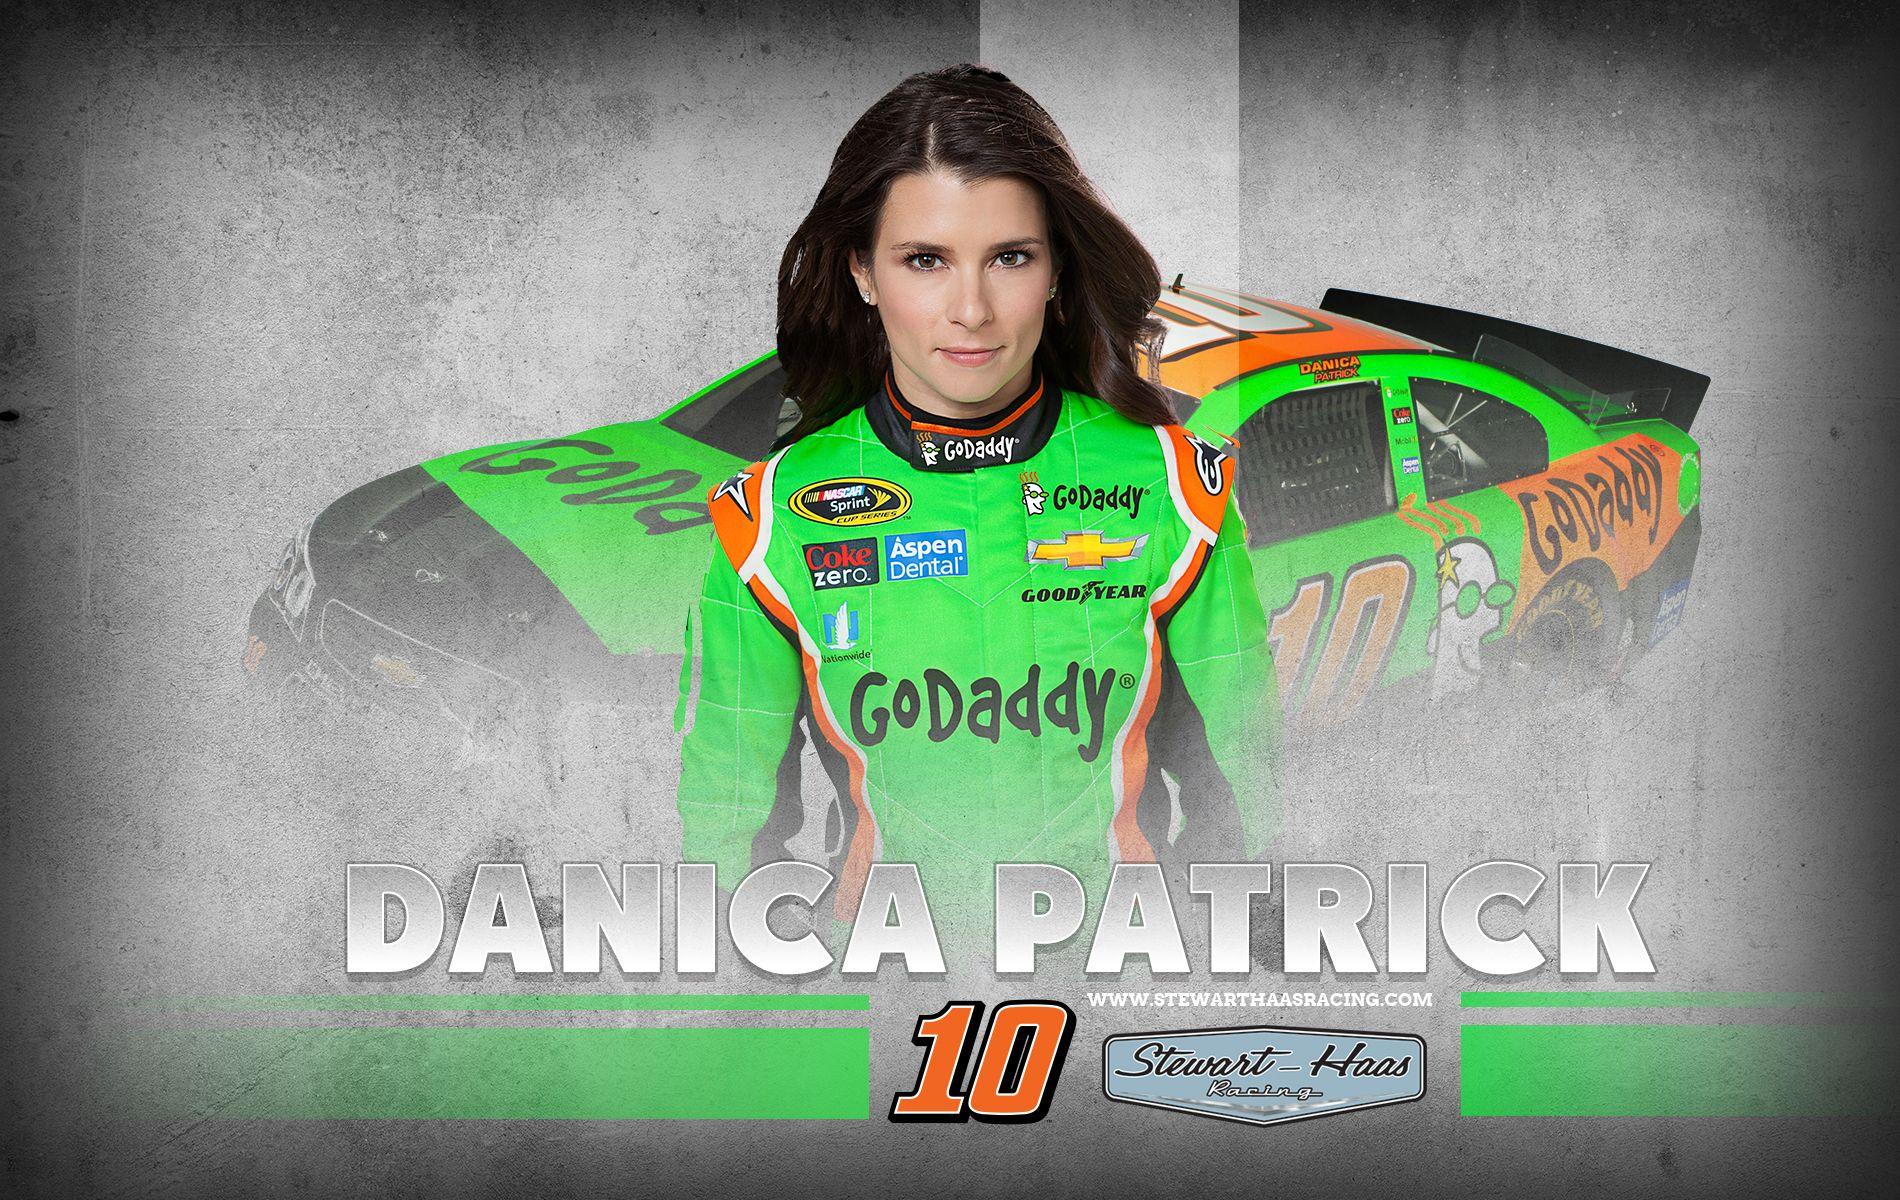 Danica Patrick Wallpapers Top Free Danica Patrick Backgrounds Images, Photos, Reviews